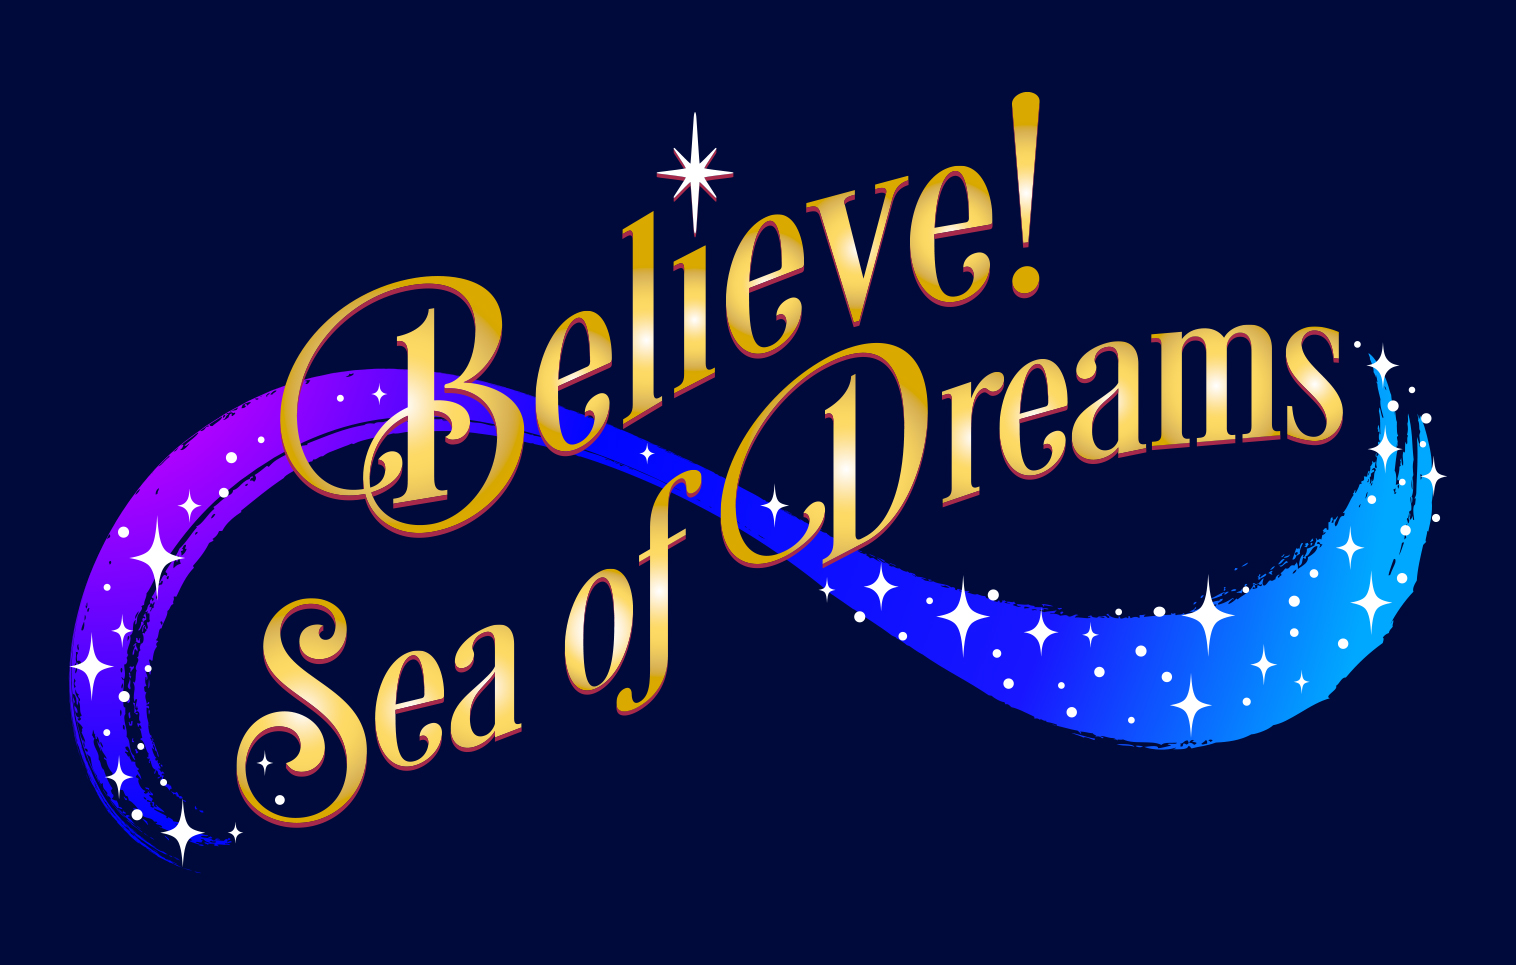 Believe! Sea of Dreams coming to Tokyo DisneySea in 2021